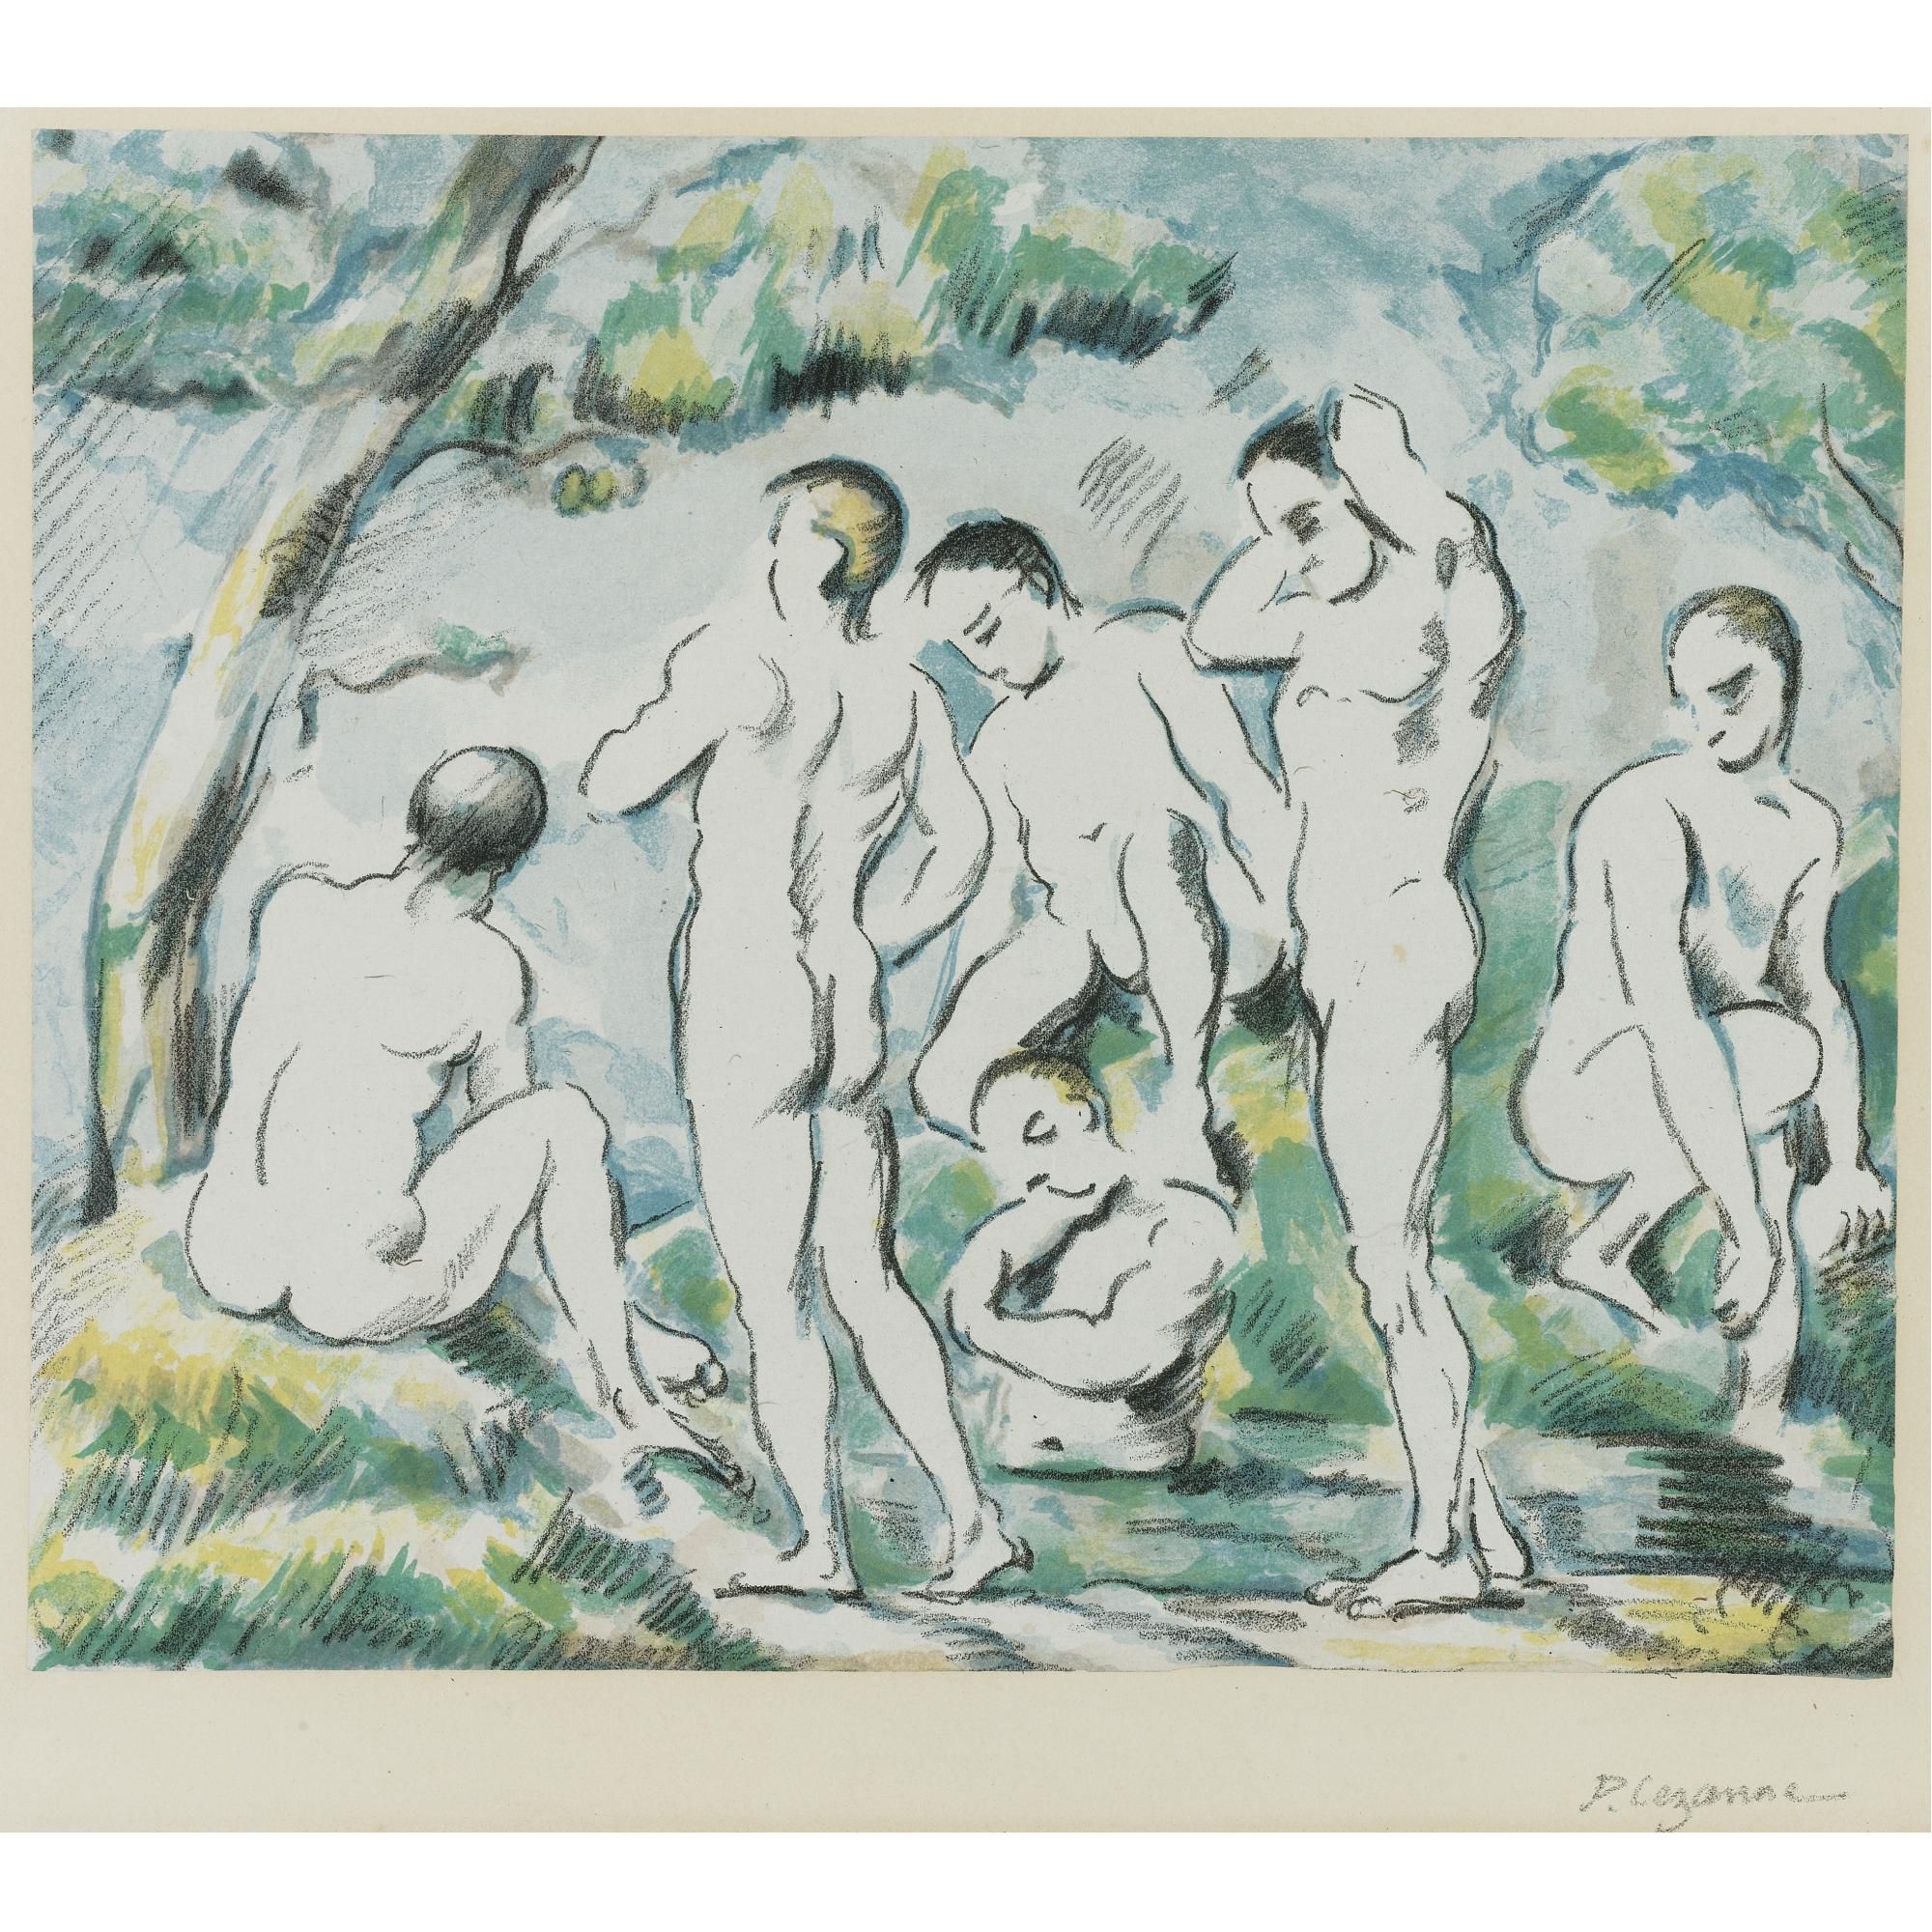 The Small Bathers (Venturi 1156; Druick III) by Paul Cézanne